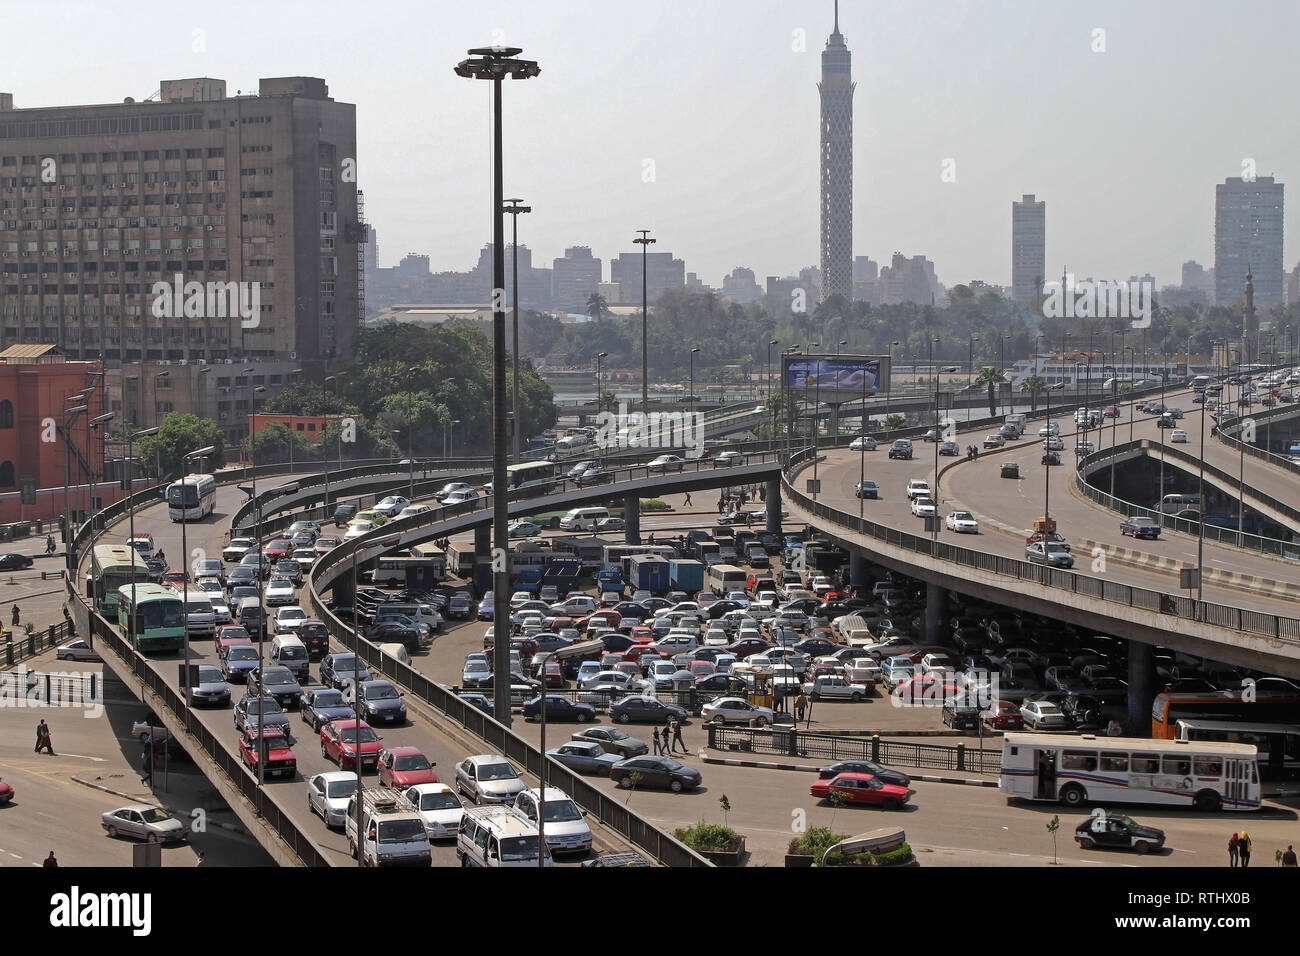 Kairo, Ägypten - März 03, 2010: Stau Transport Zusammenbruch an der Kreuzung in Kairo, Ägypten. Stockfoto